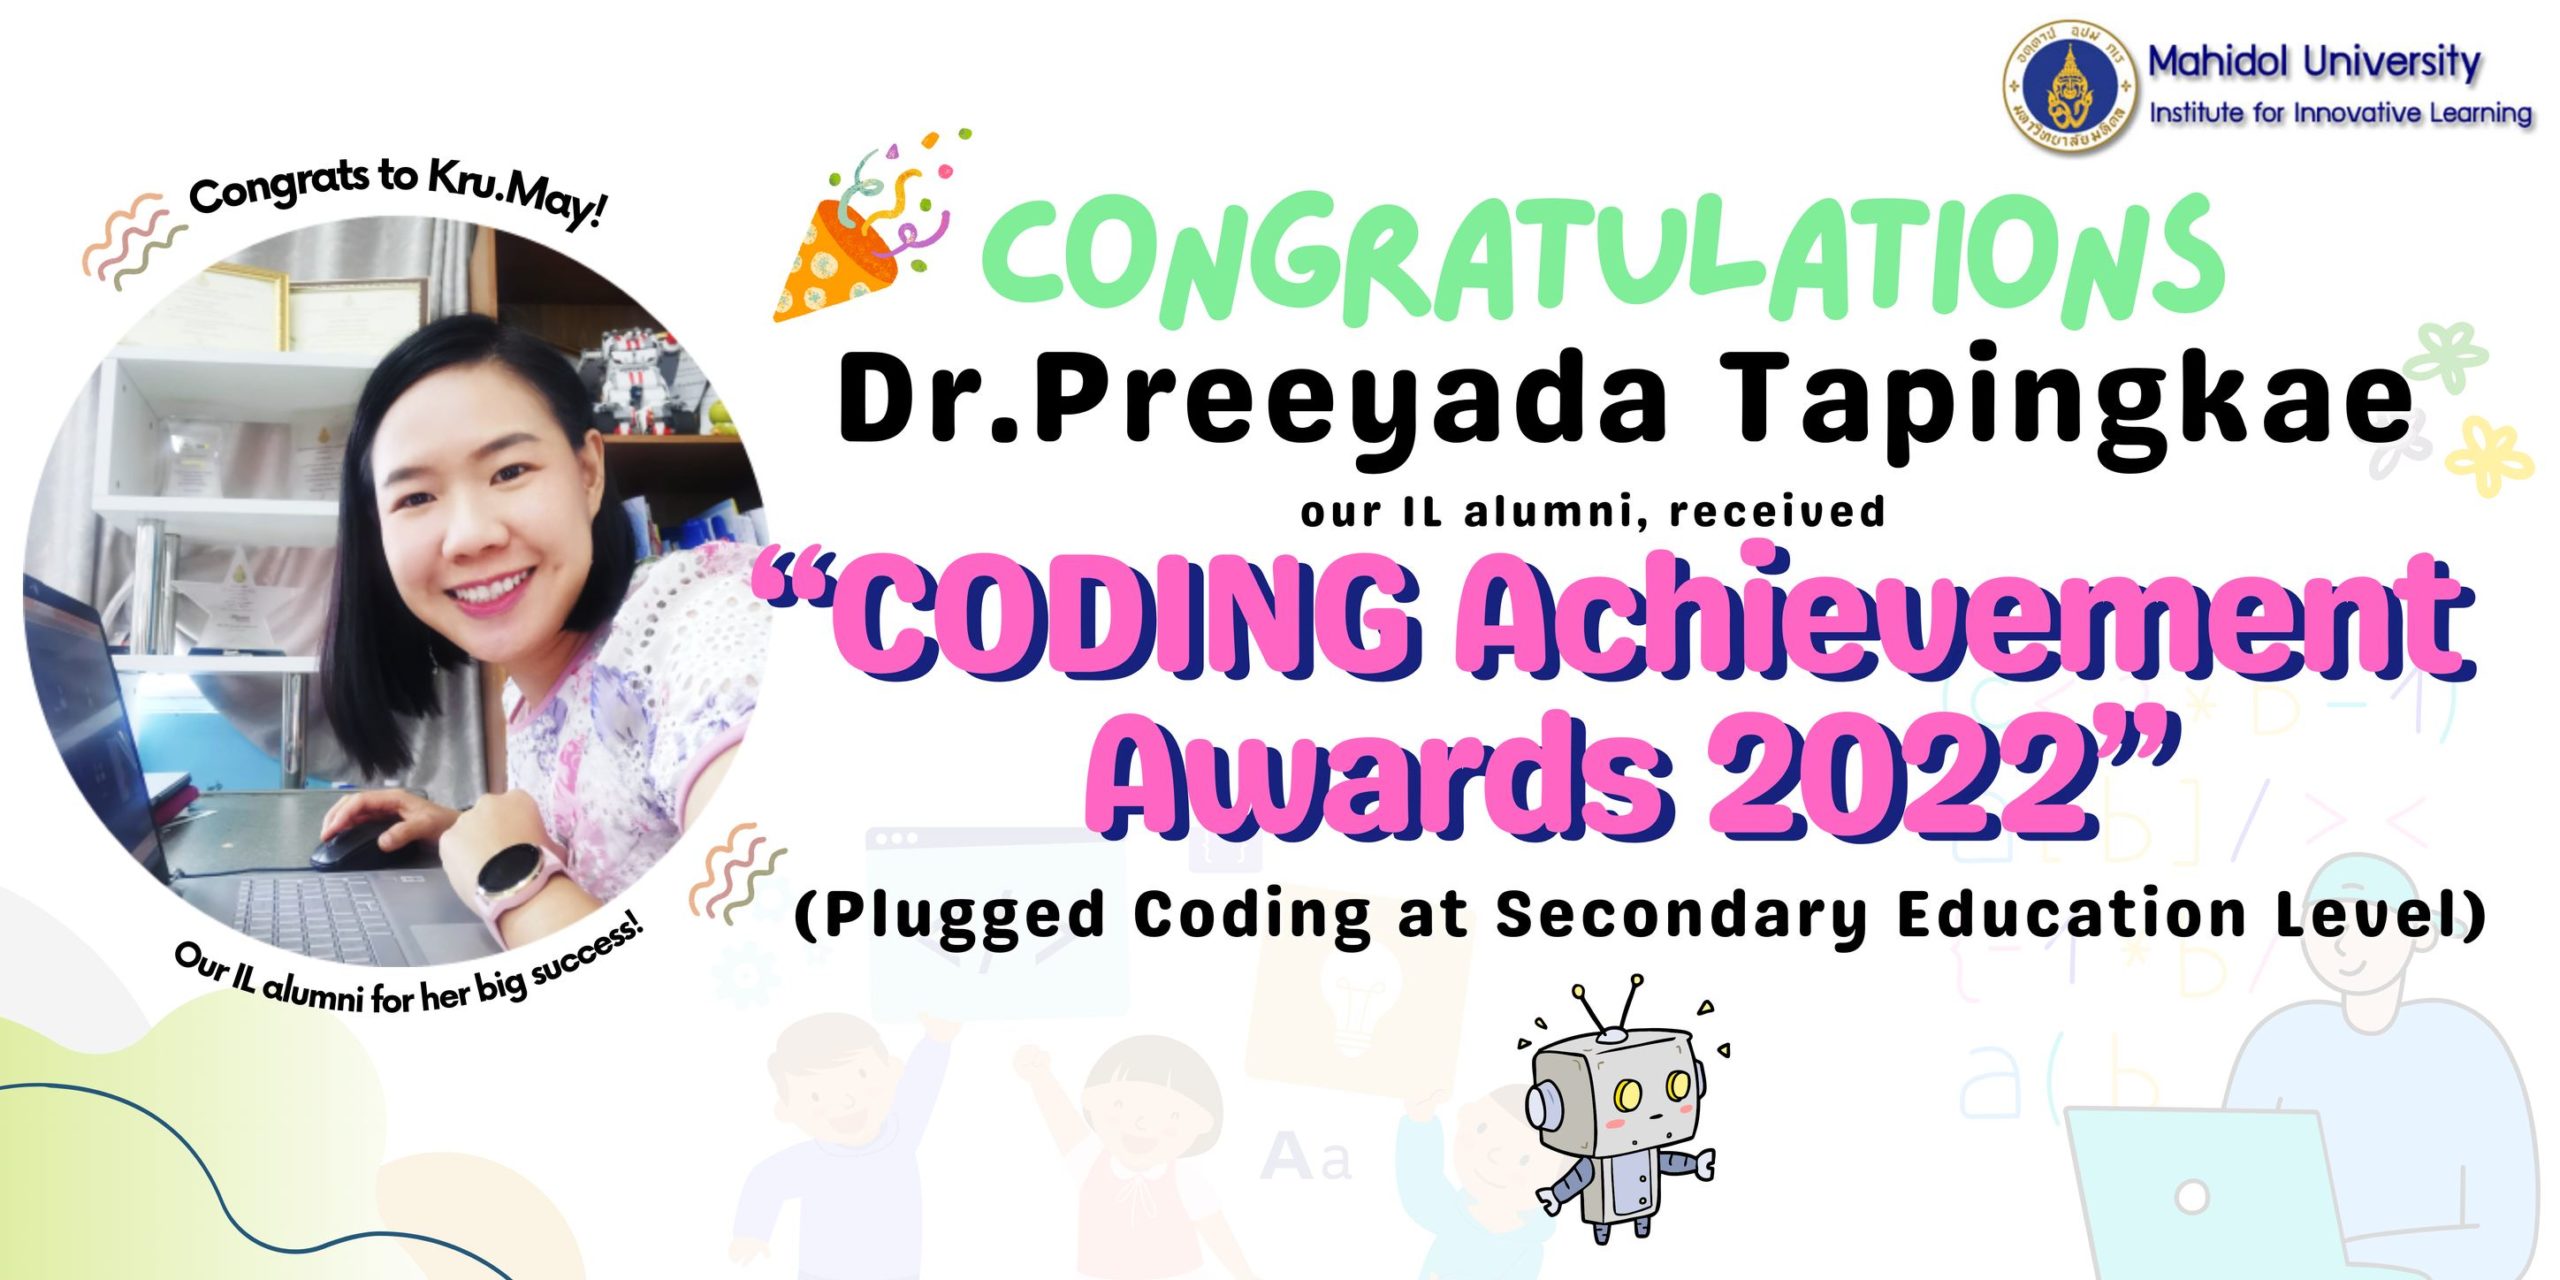 Congratulations to Dr.Preeyada Tapingkae